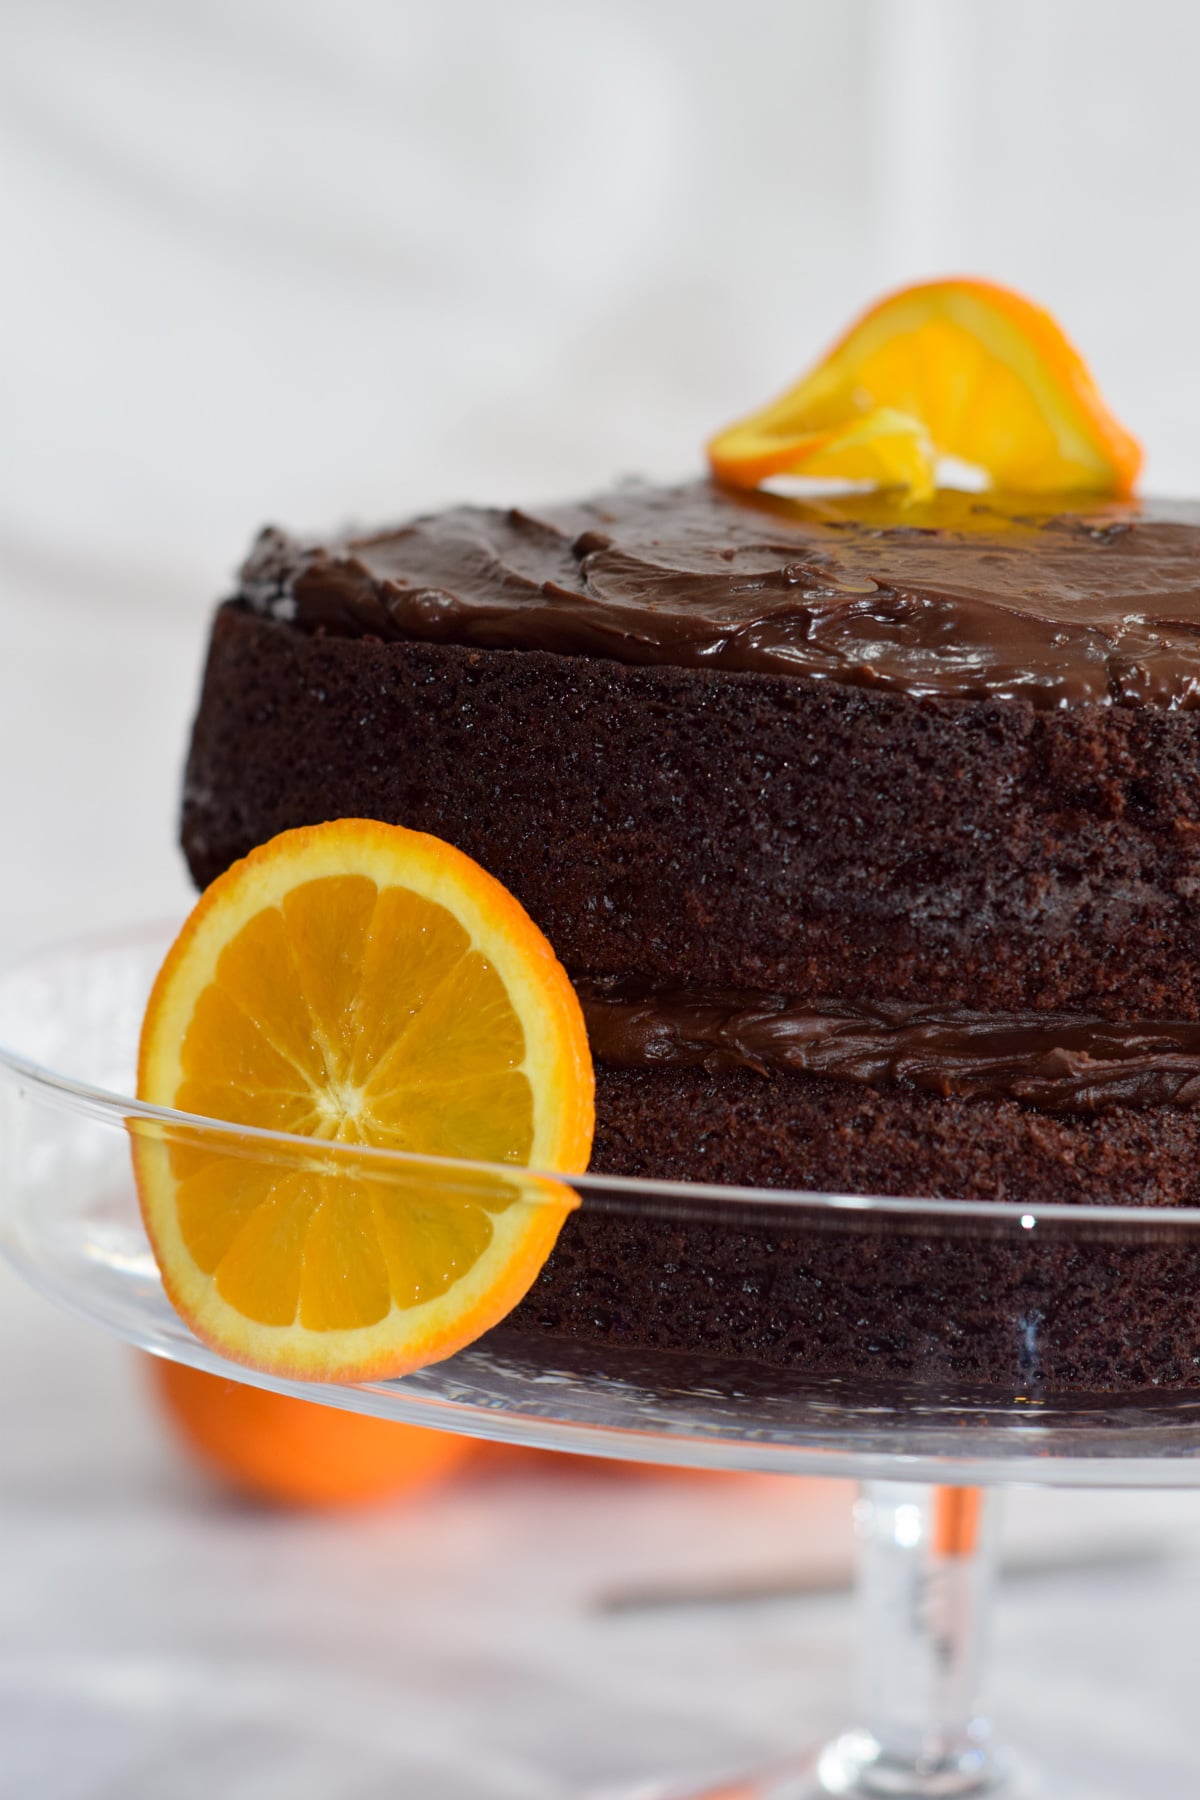 Chocolate orange cake recipe with chocolate orange ganache